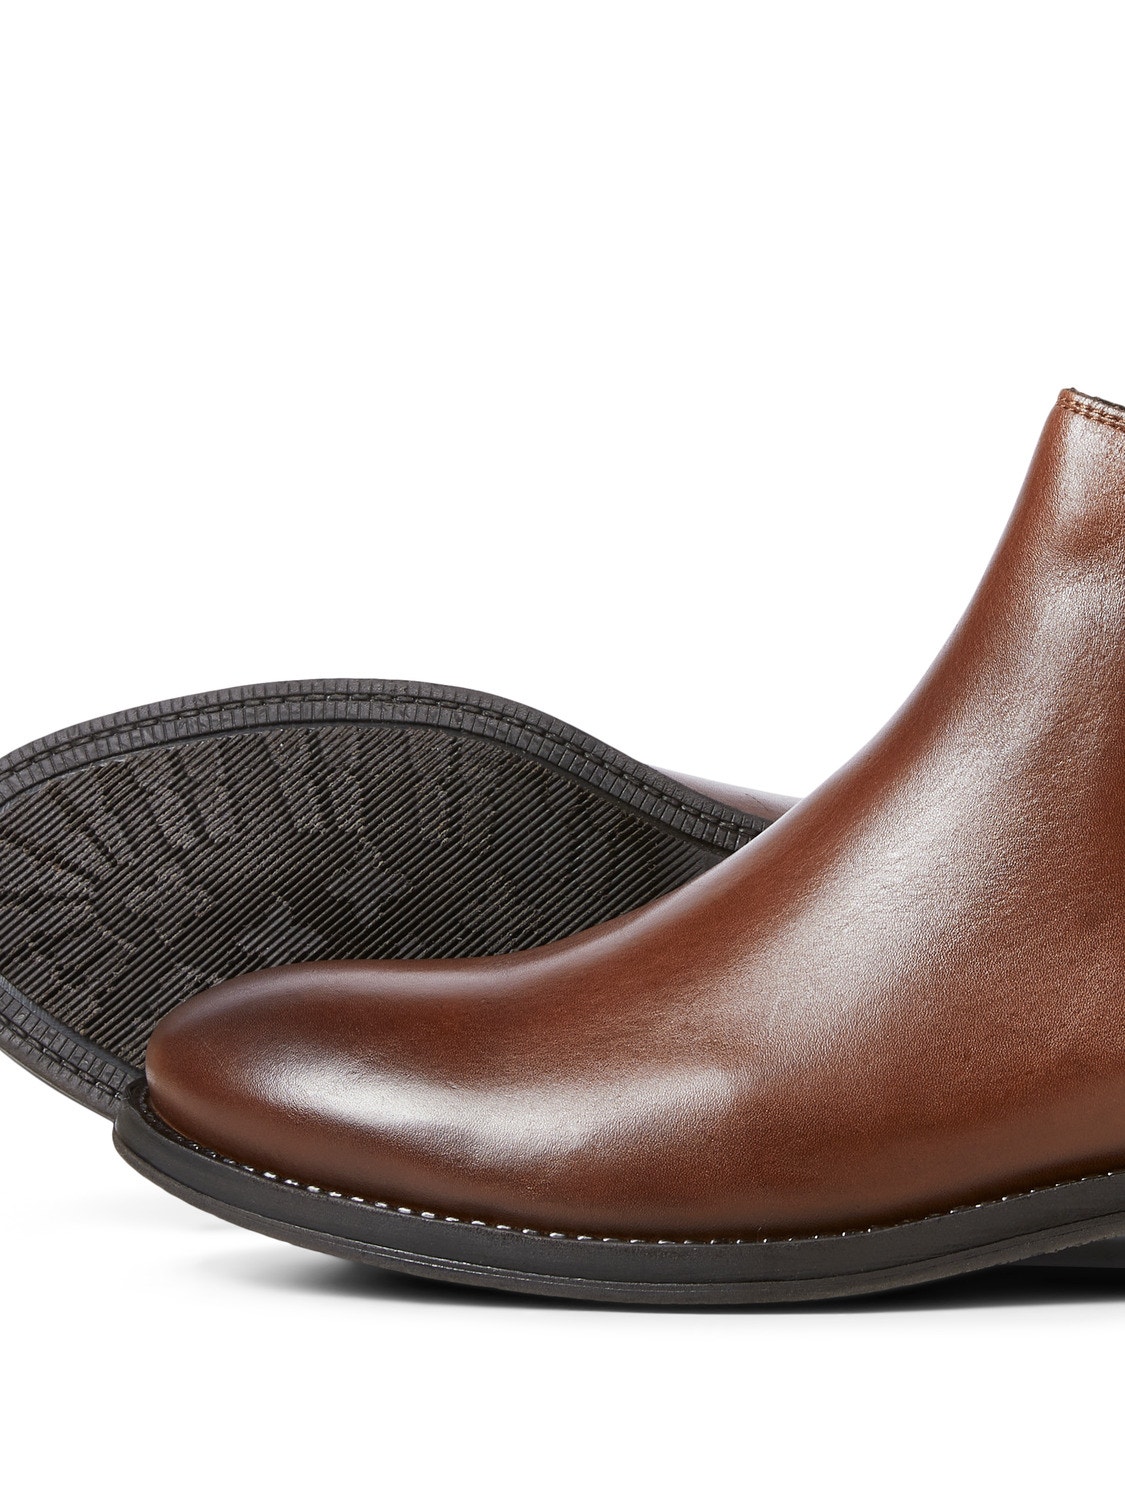 Jack & Jones Leather Chelsea boots -Cognac - 12192758